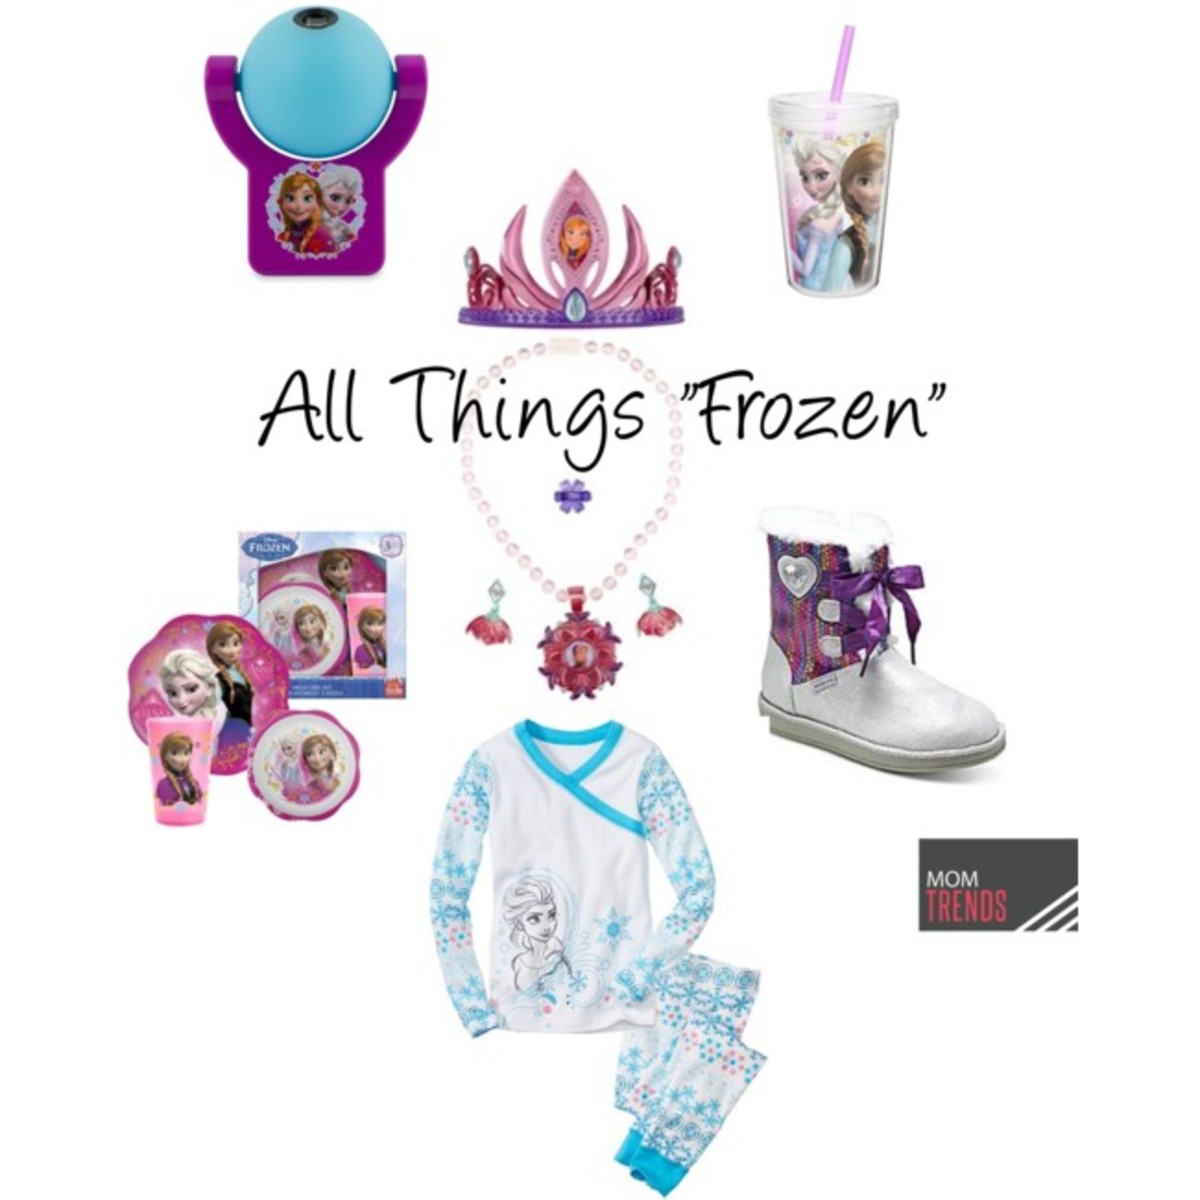 Frozen items